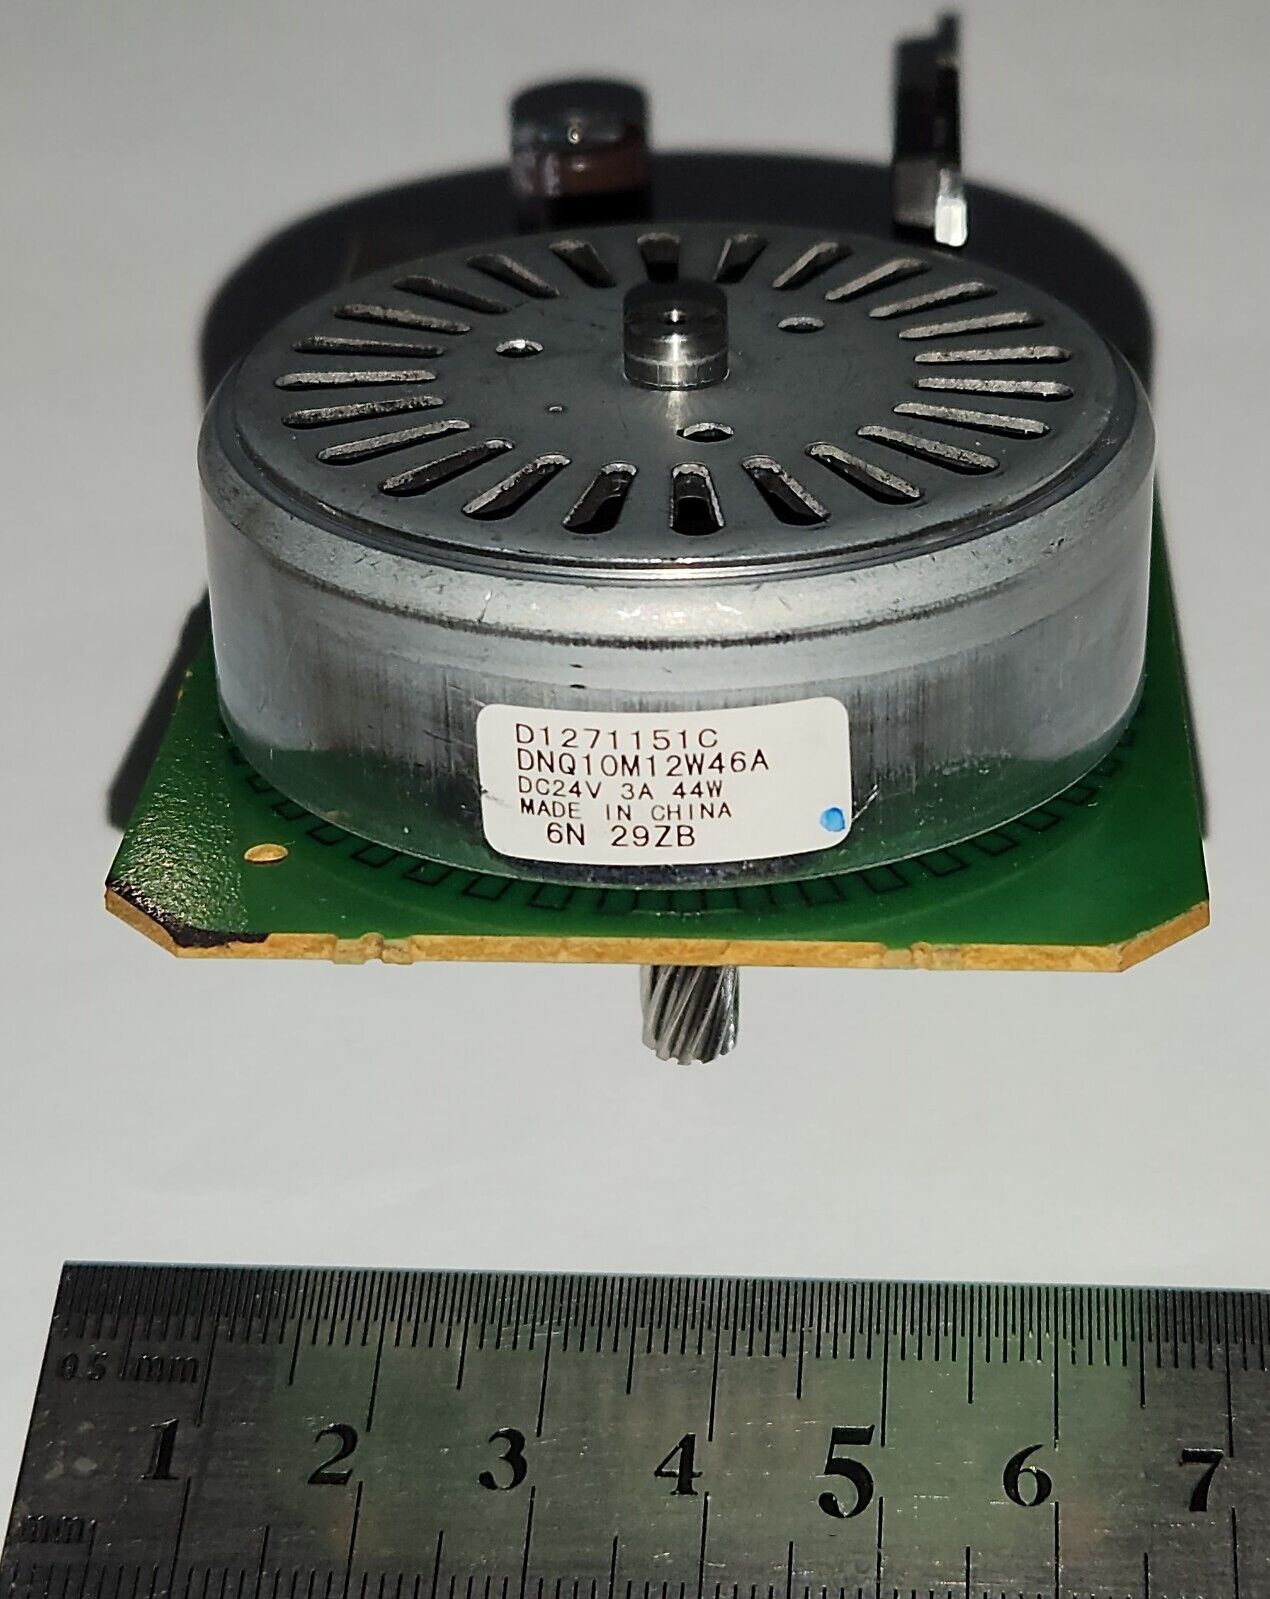 Ricoh Stepper Motor on PCB - D1271151C + controller